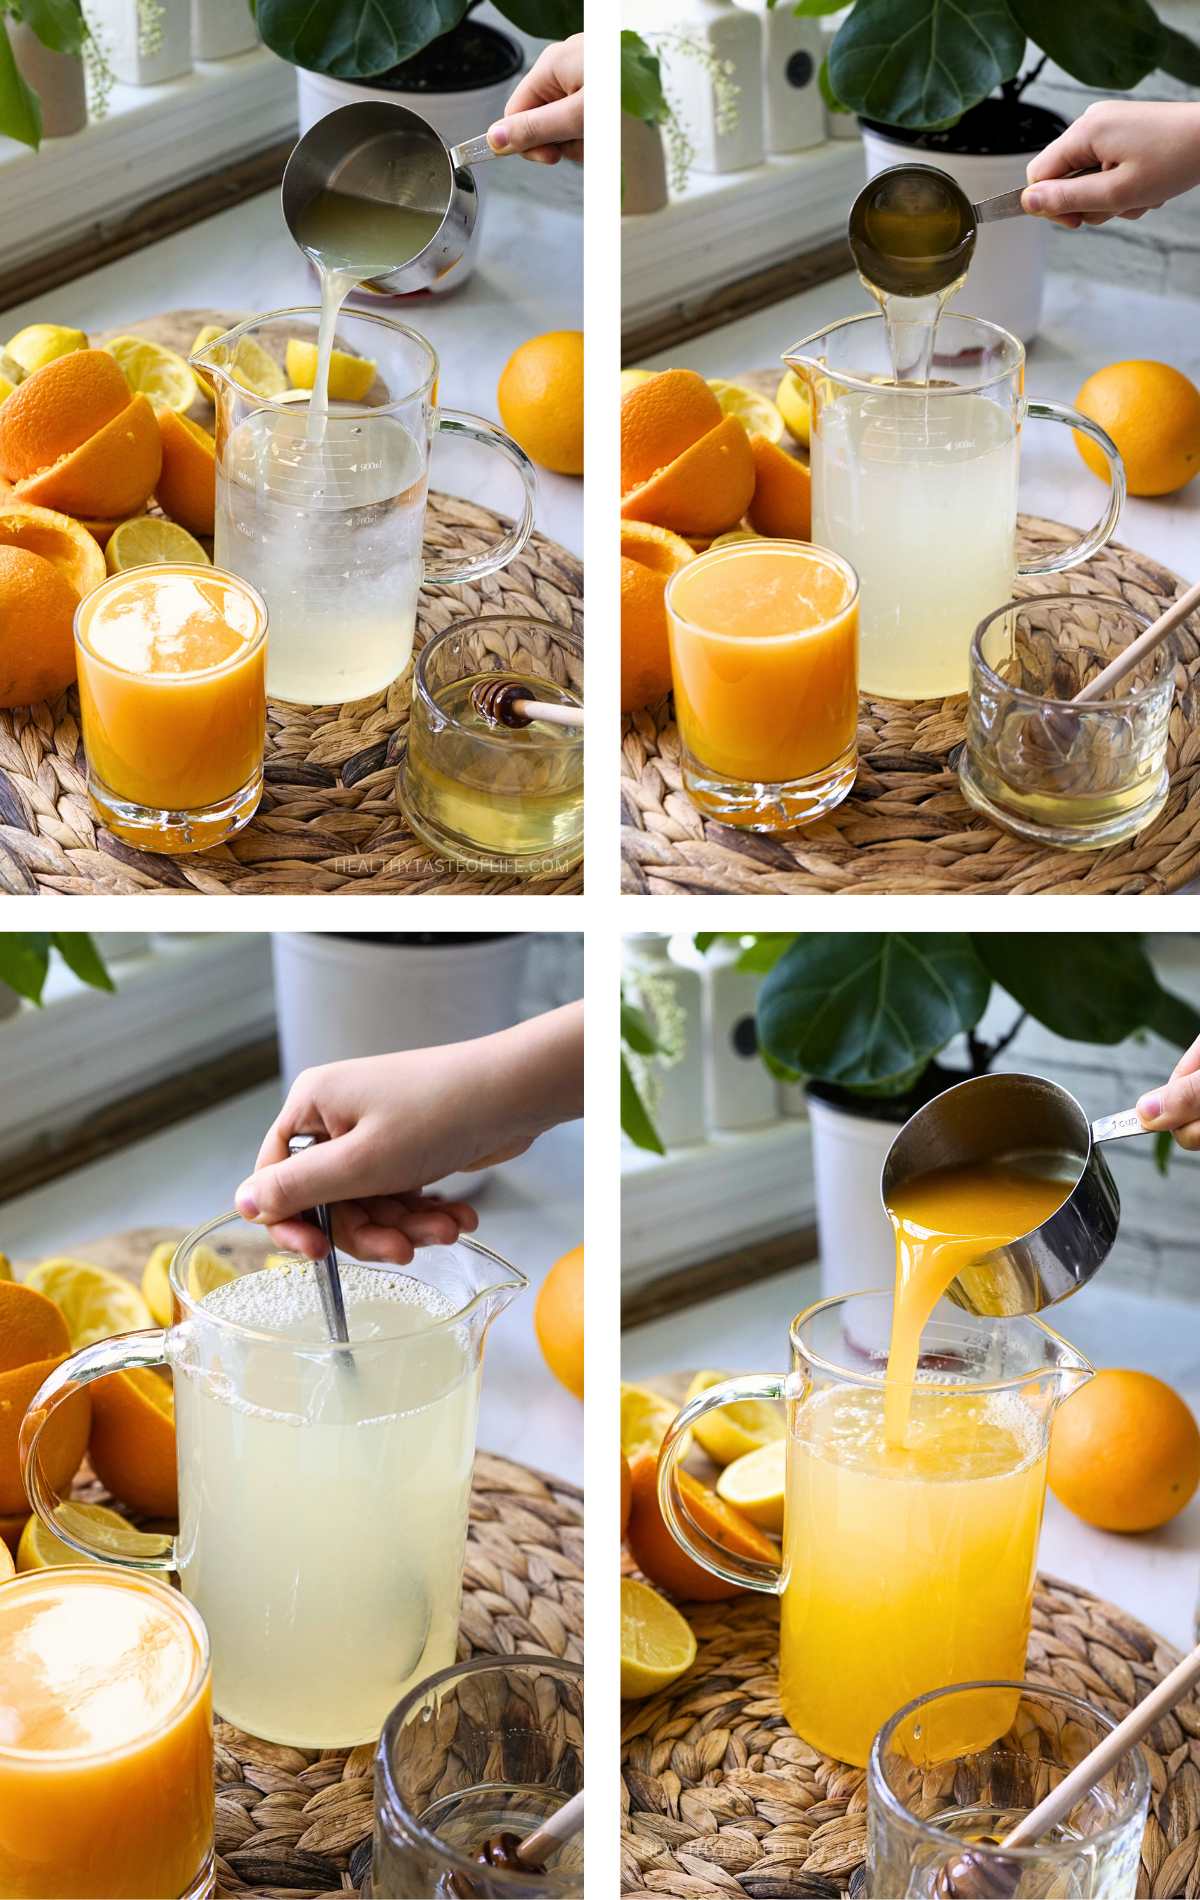 Process shots showing how to make orange lemonade recipe aka orangeade.